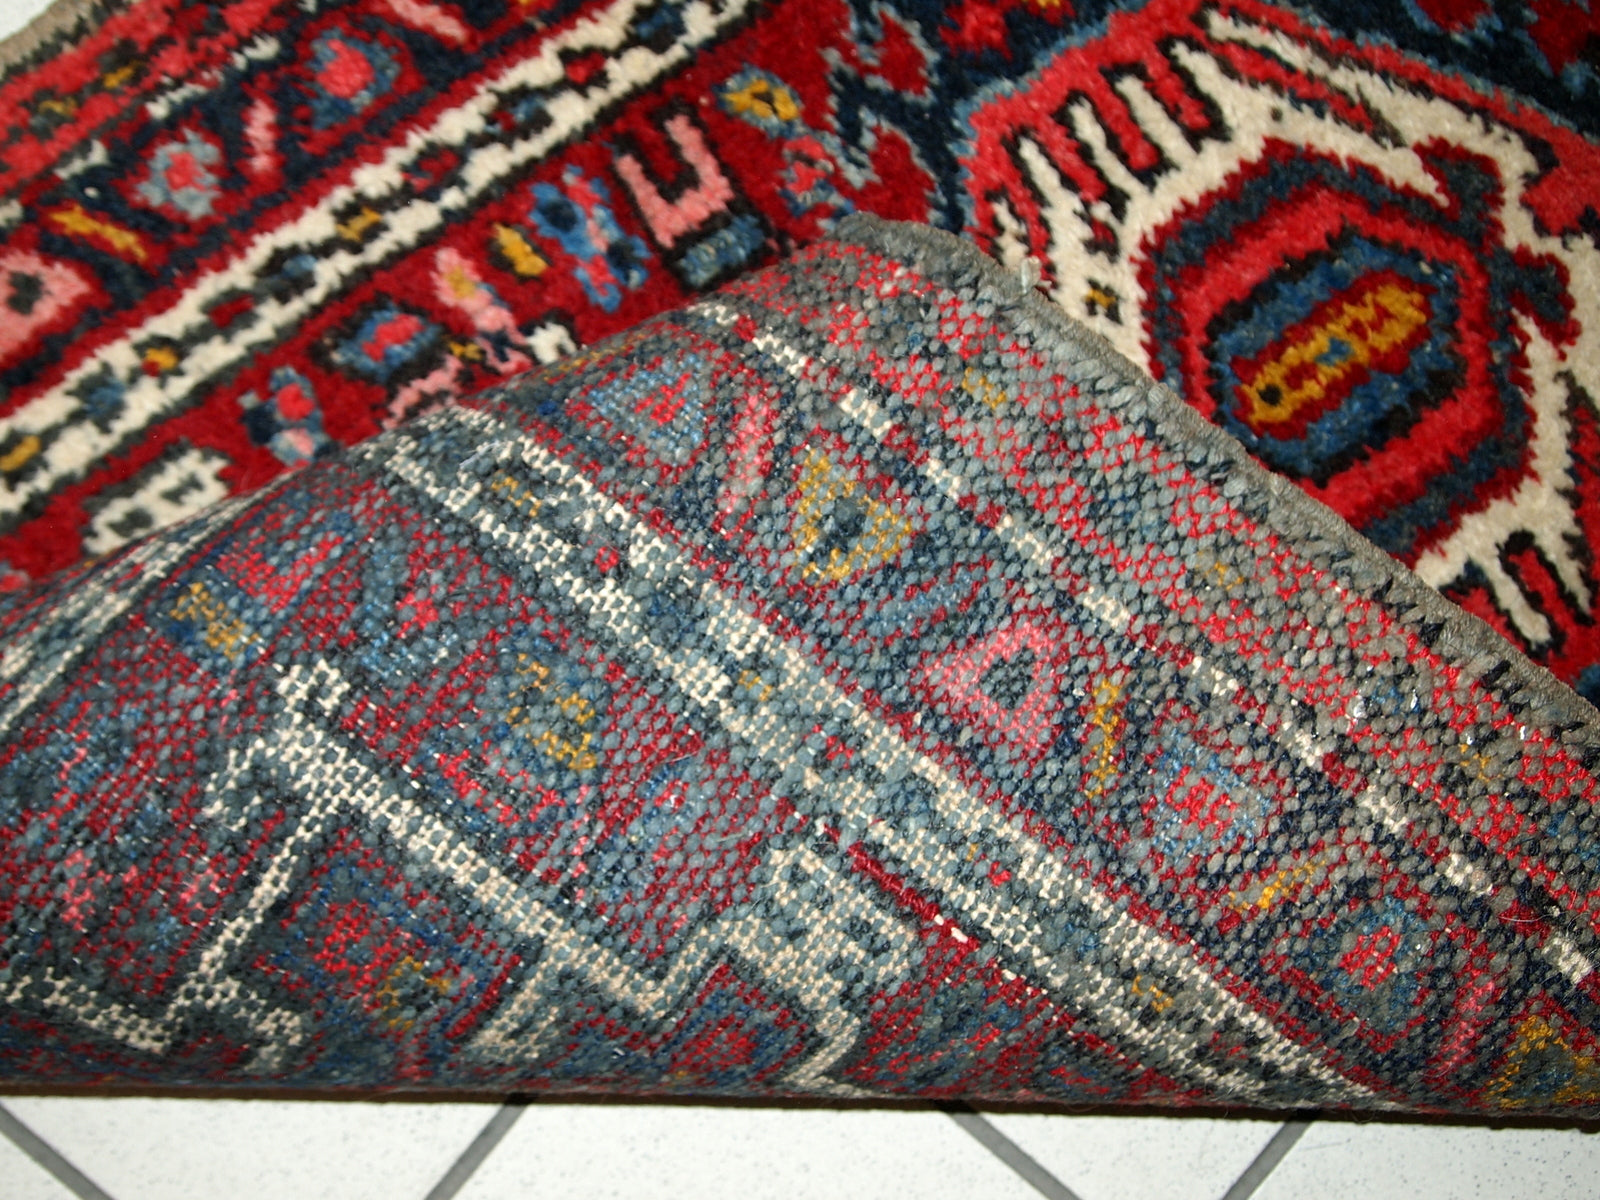 Handmade antique Persian Karajeh rug 1920s